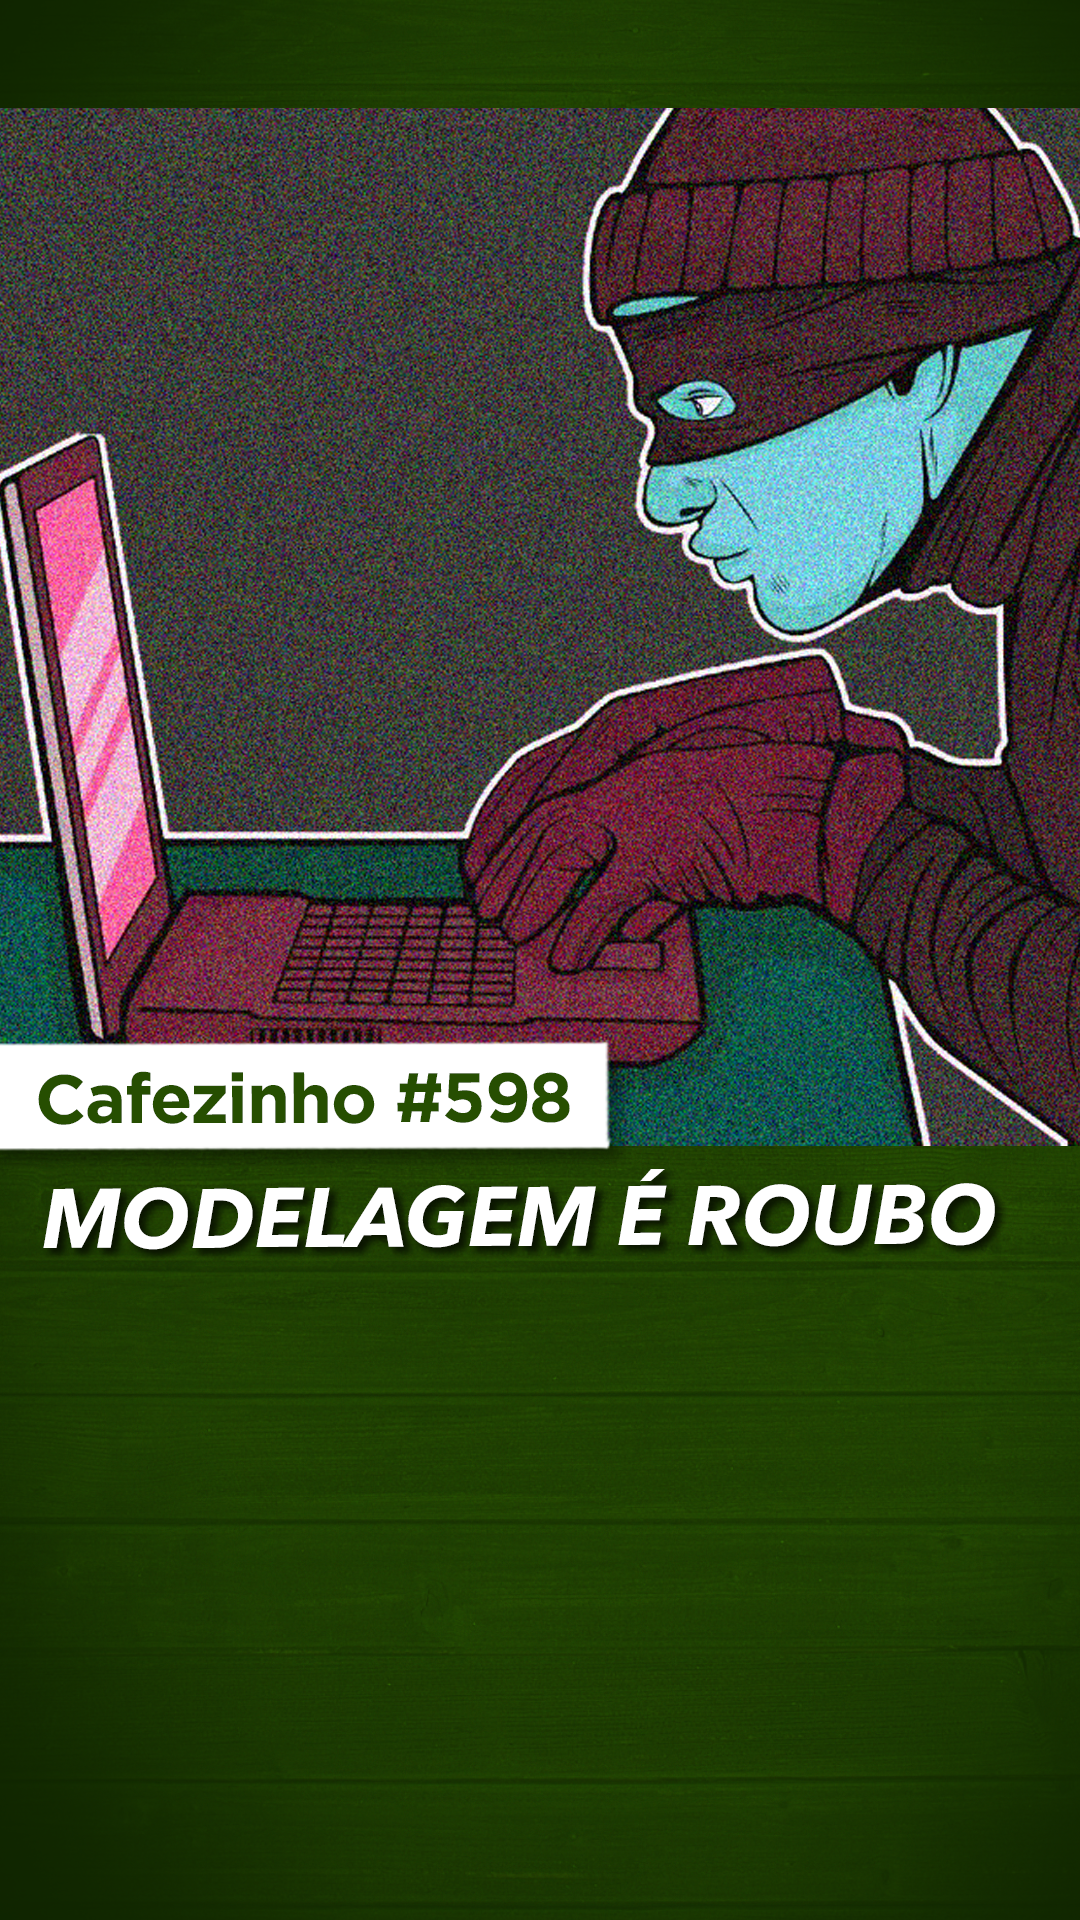 Cafezinho 598 – Modelagem é roubo